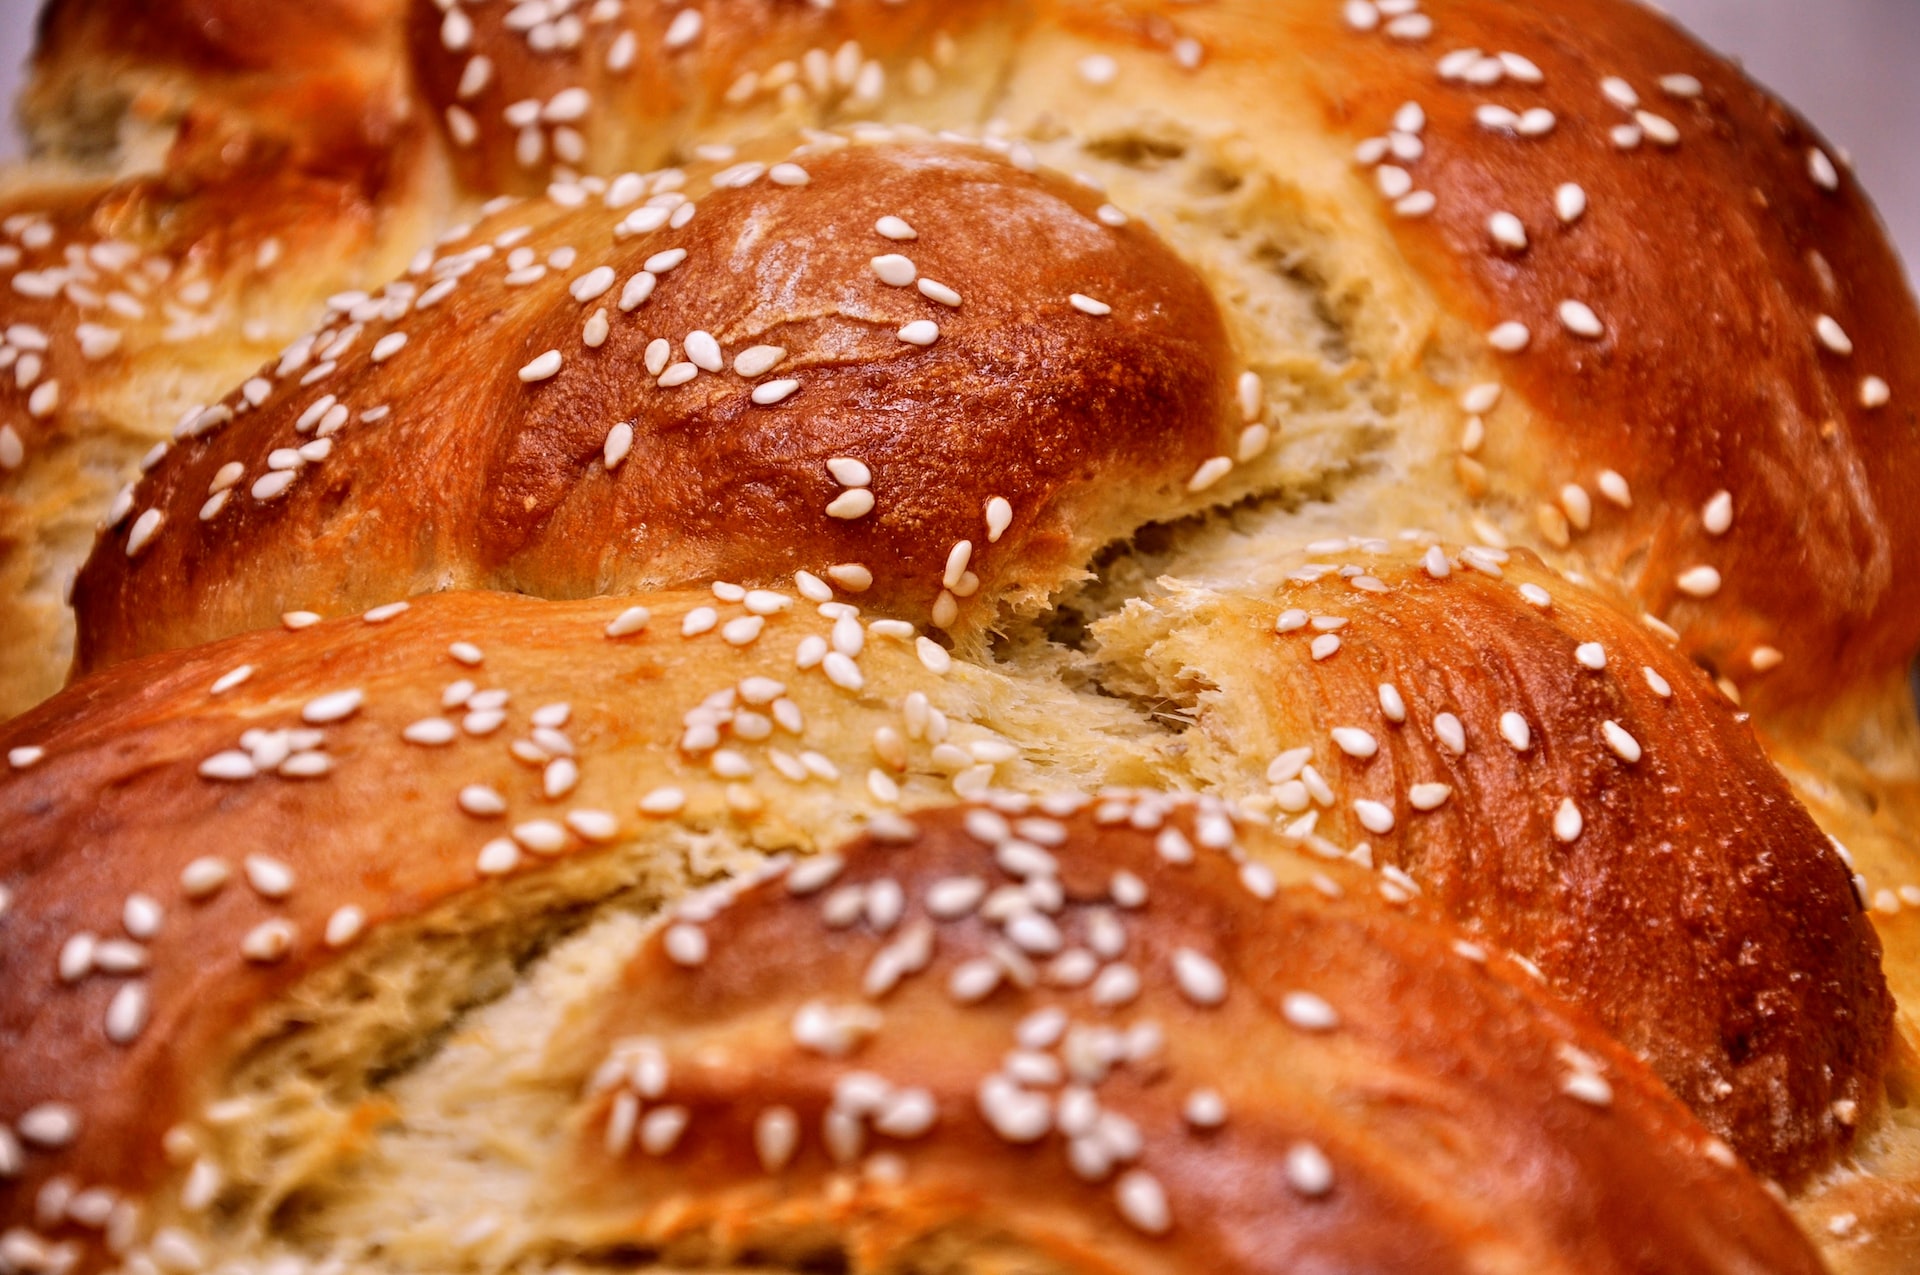 Freshly baked challah bread